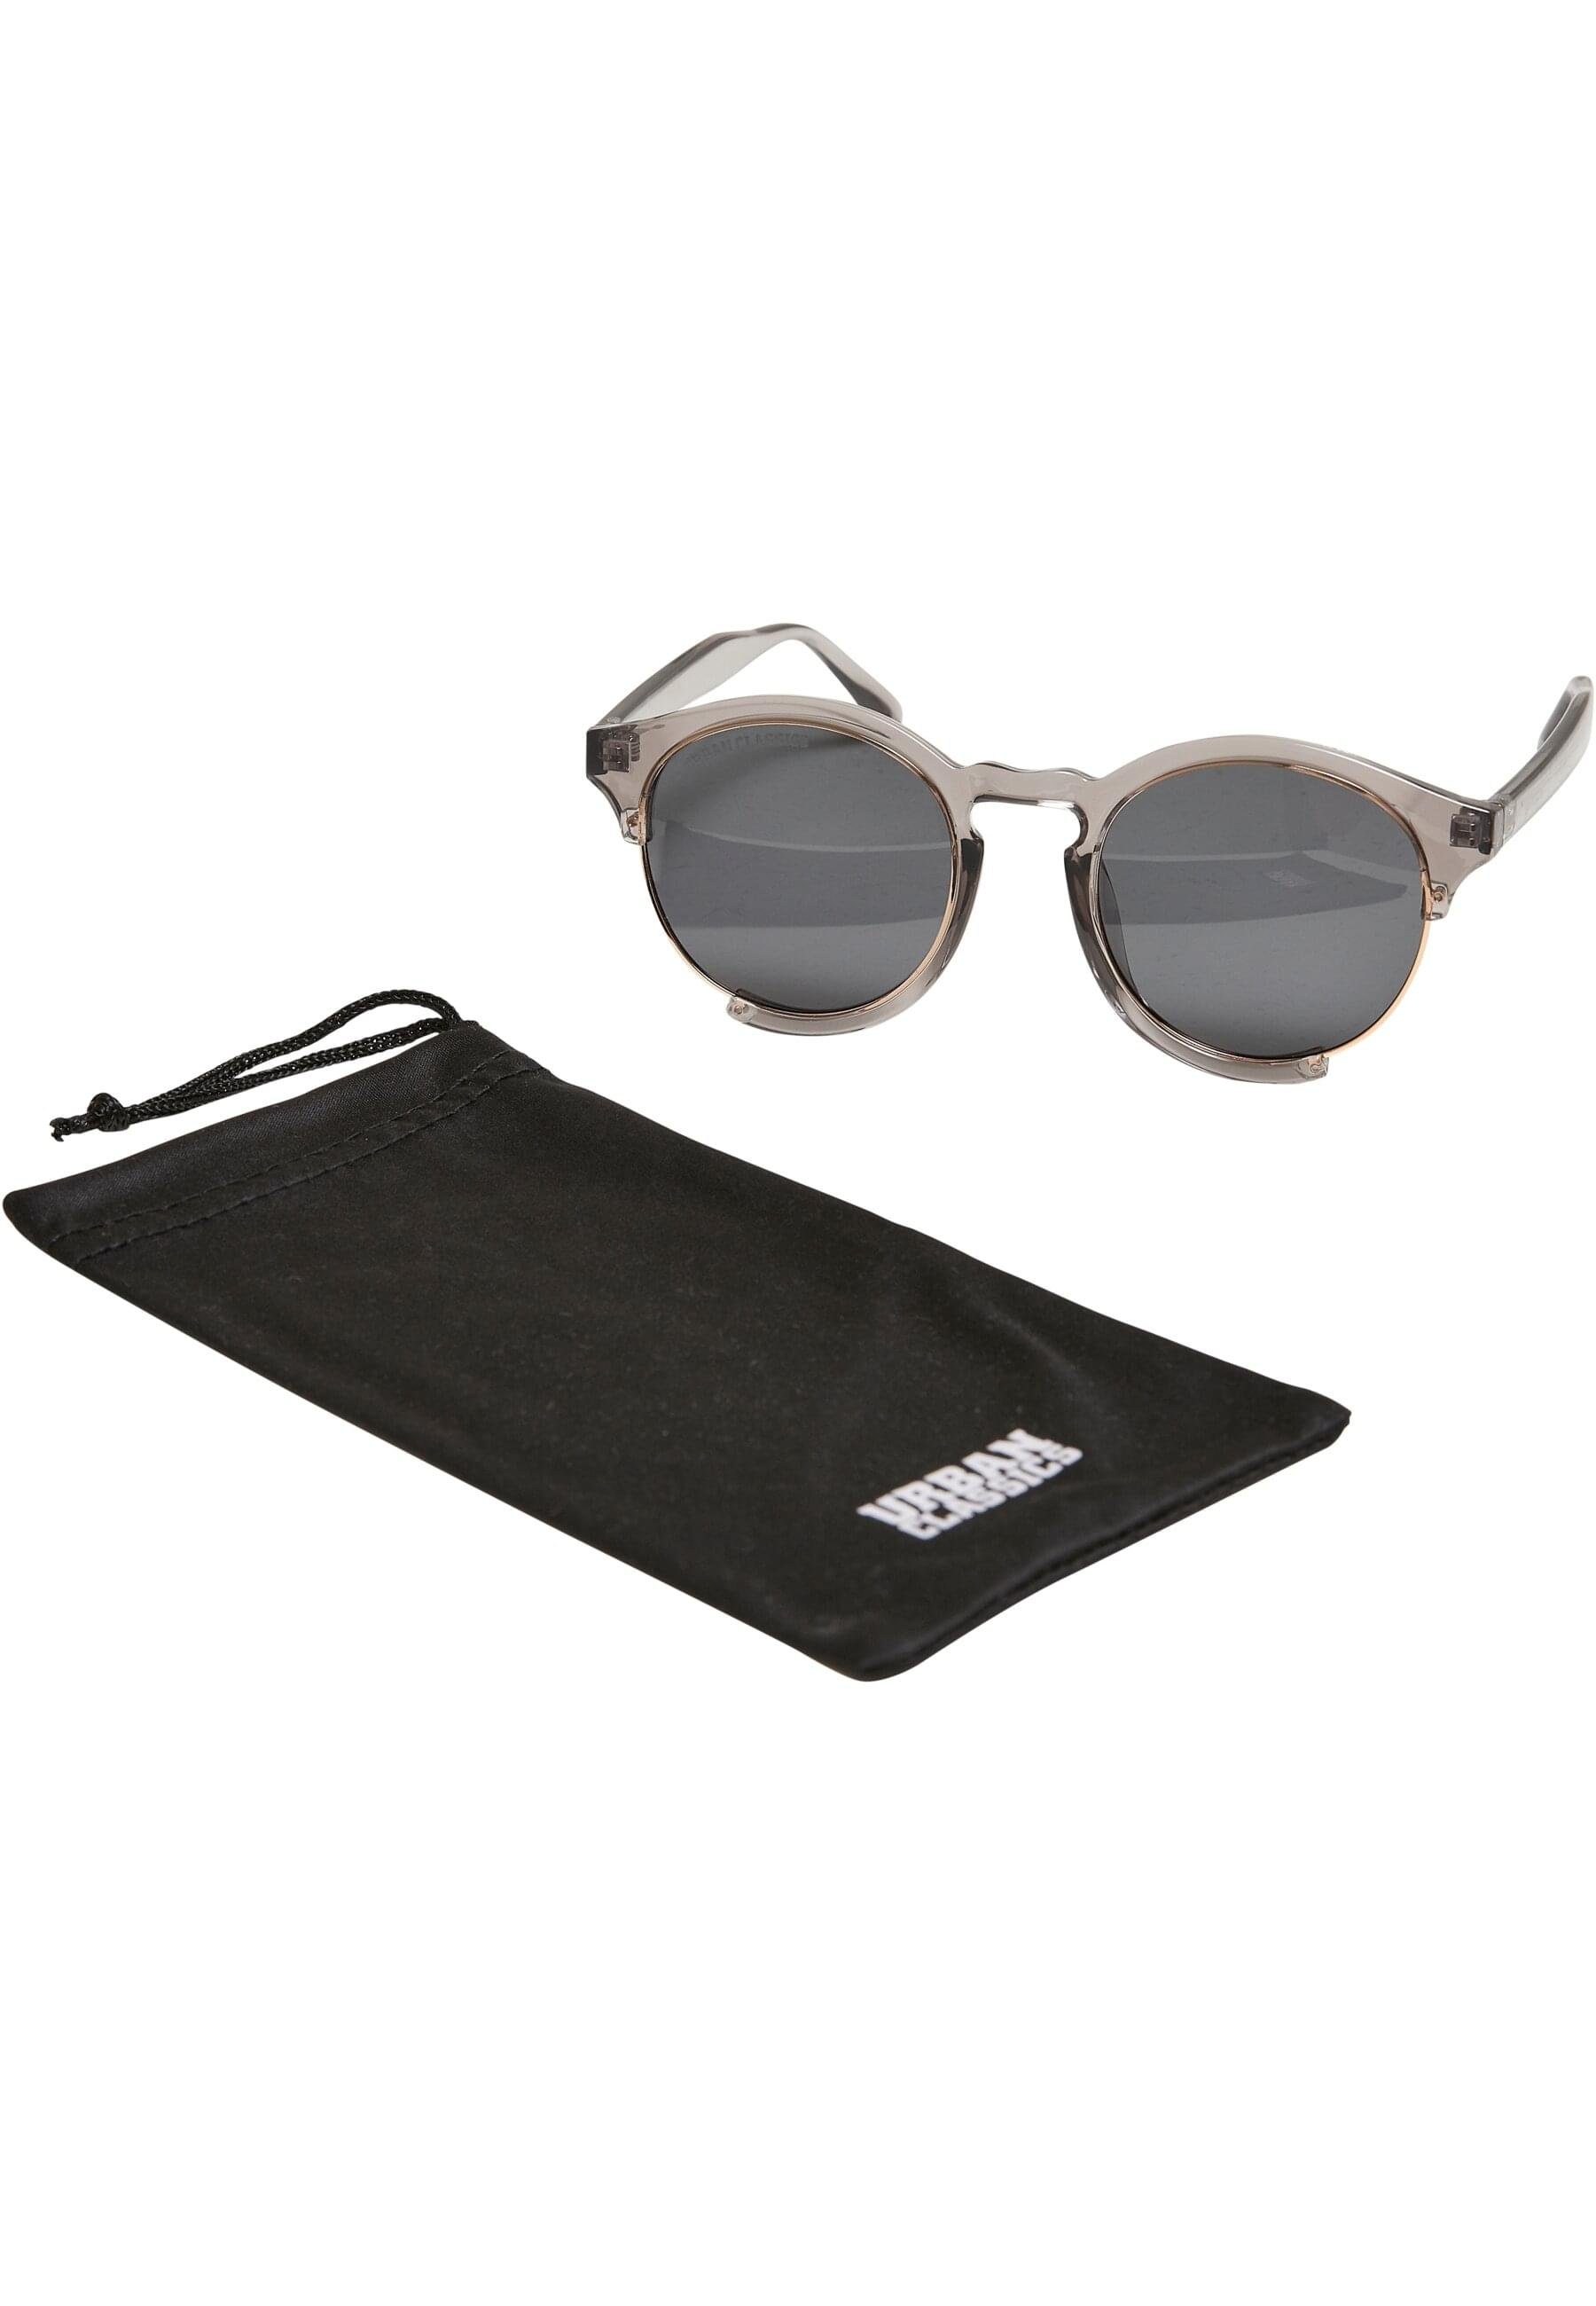 Sonnenbrille Unisex URBAN Sunglasses CLASSICS Bay grey Coral